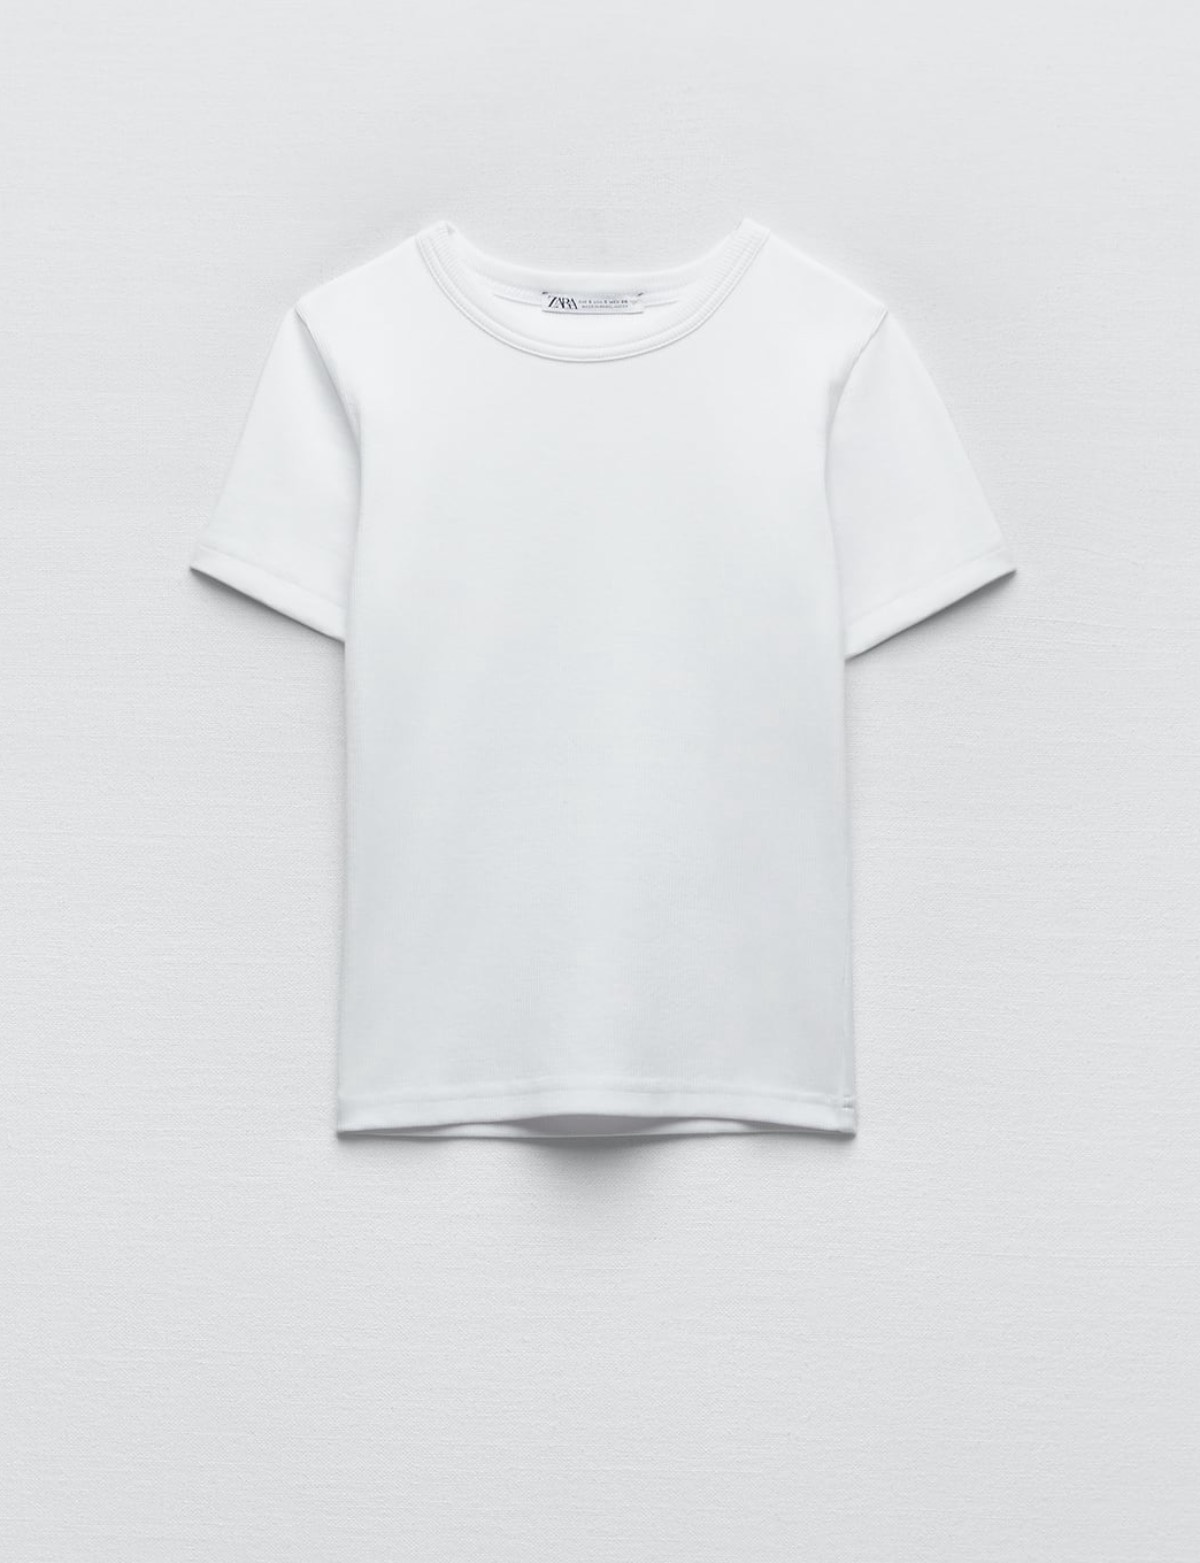 Camiseta Rib de Zara